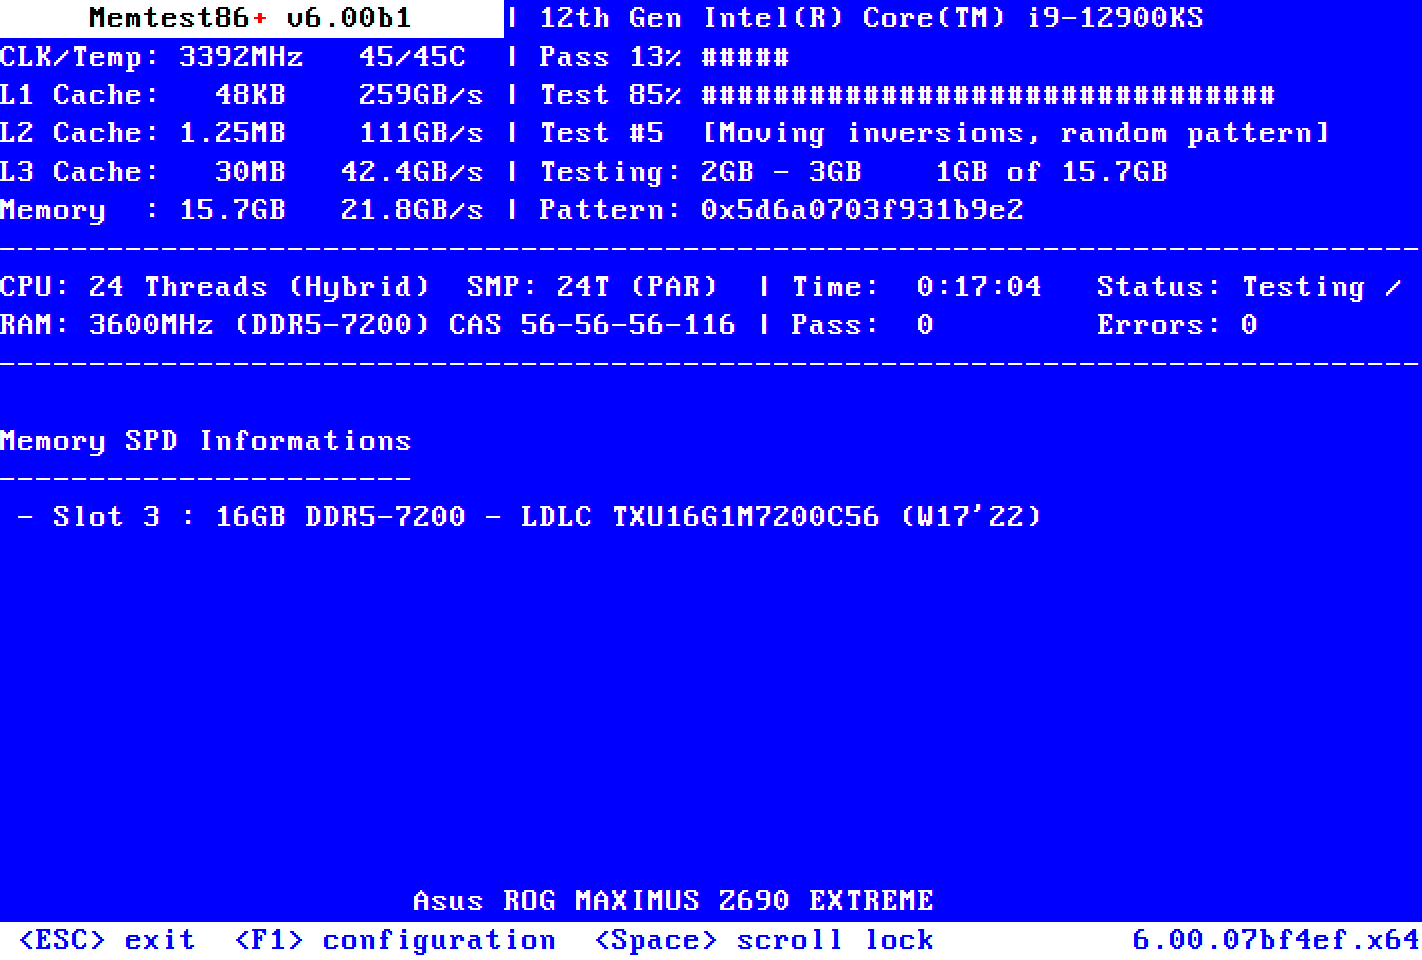 Test RAM con MemTest86+